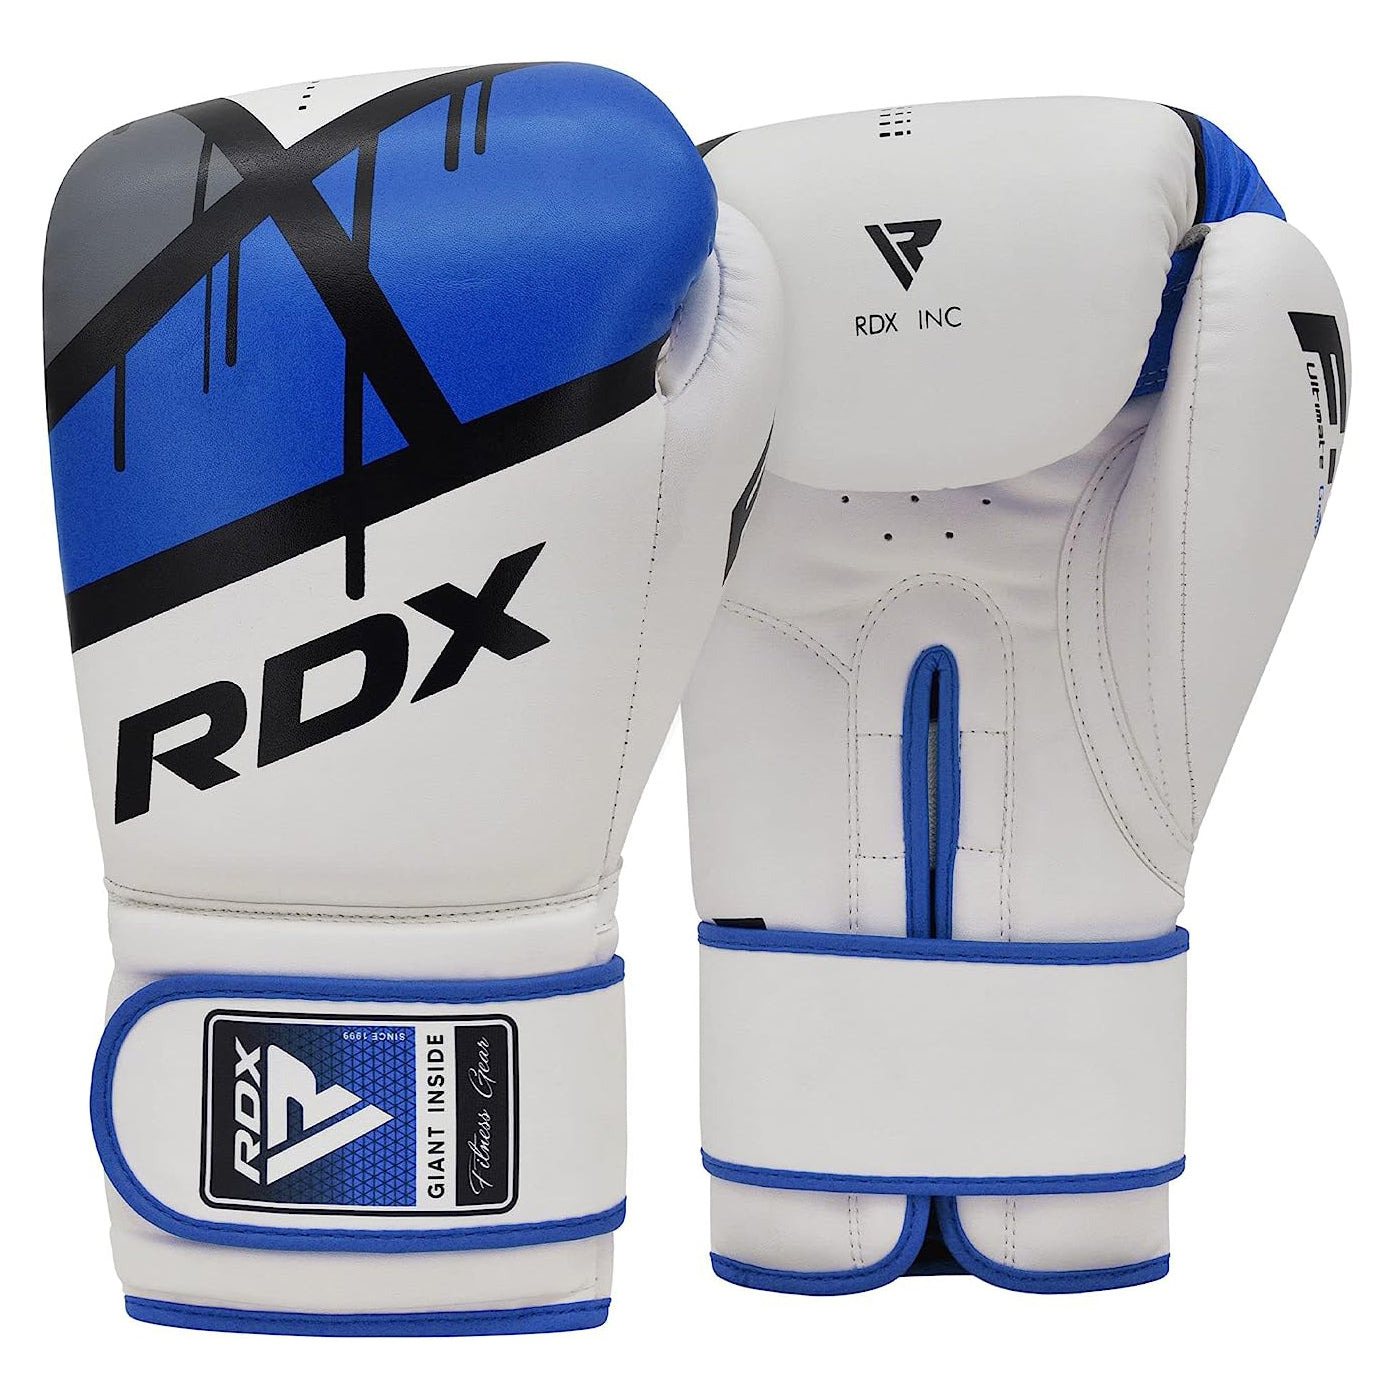 RDX F7 EGO MMA, BJJ, Muay Thai, Kickboxing, Training Boxing Gloves - BLUE - 8oz - Pro-Distributing